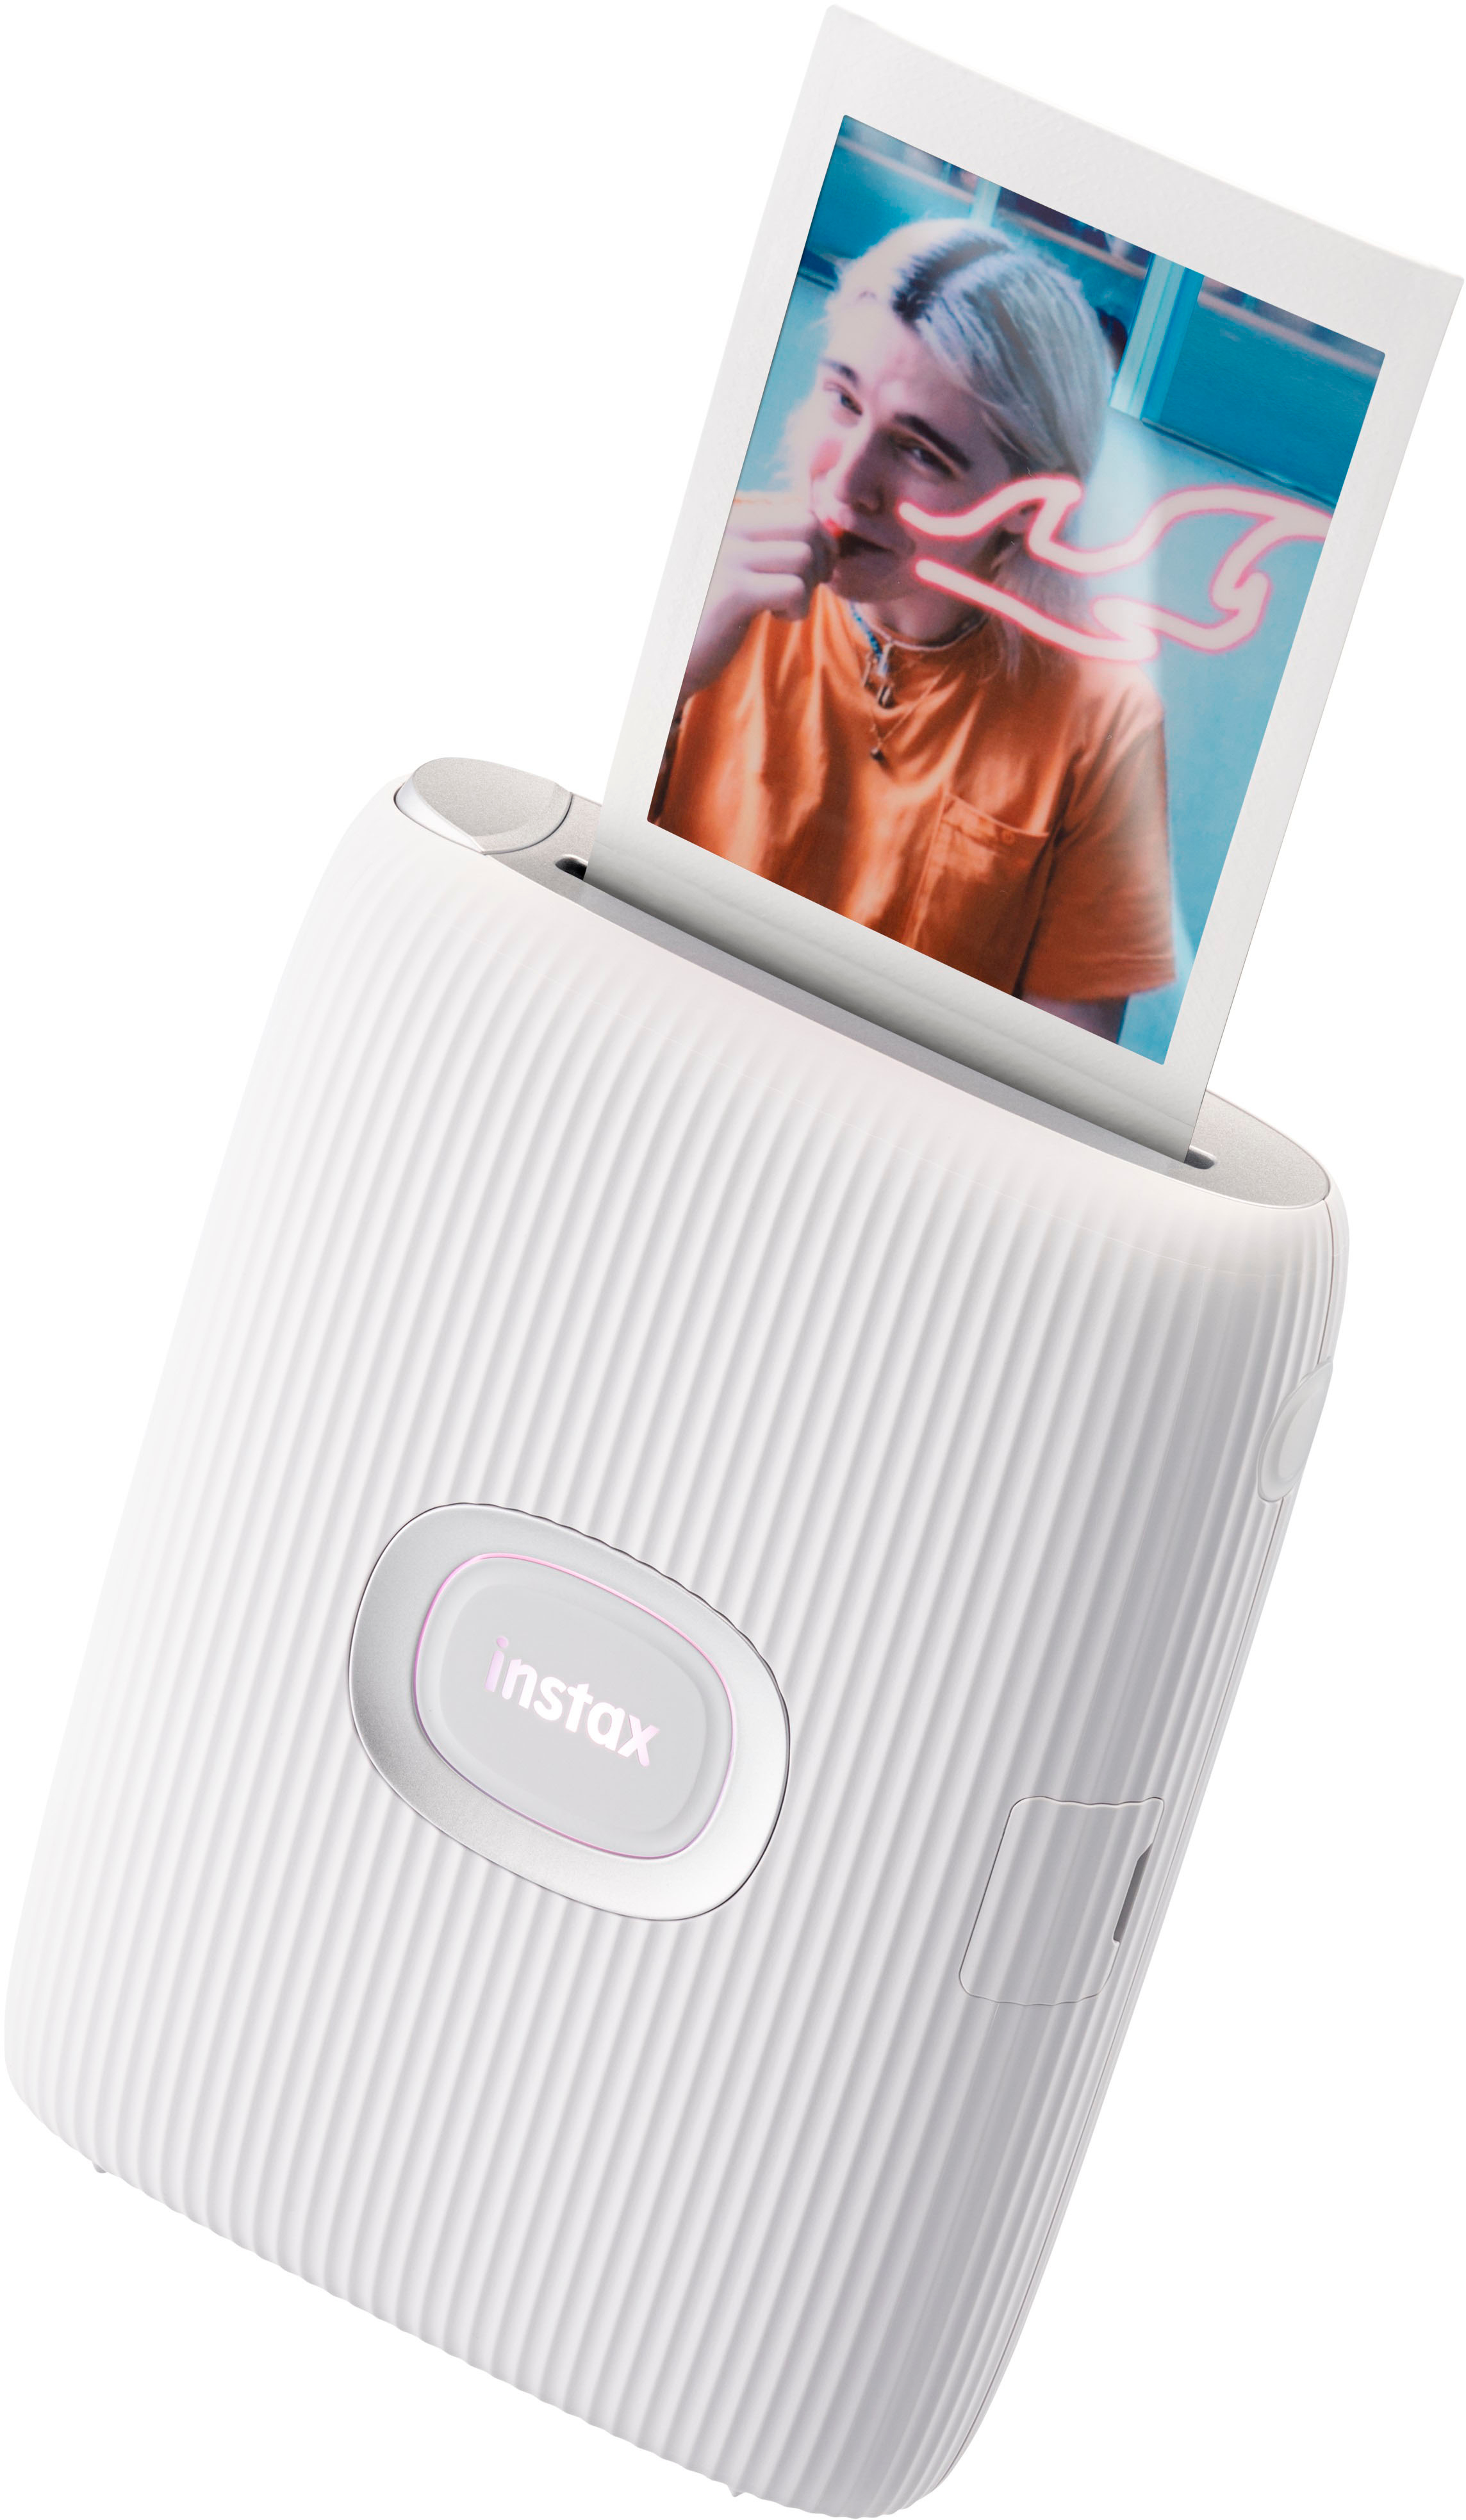 Fujifilm Instax Mini Link 2 Wireless Photo Printer White 16767155 - Best Buy